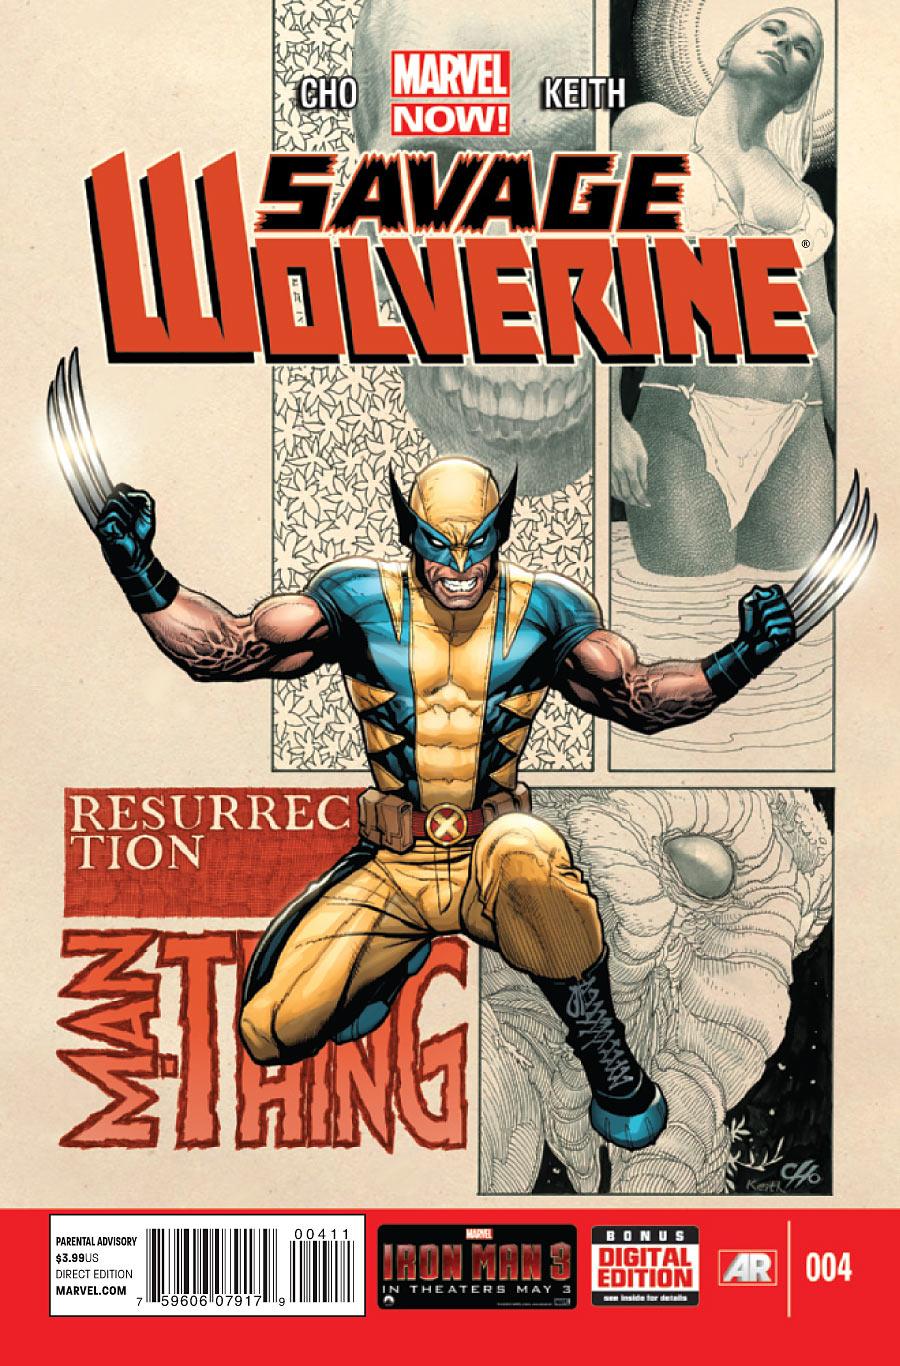 Savage Wolverine Vol. 1 #4